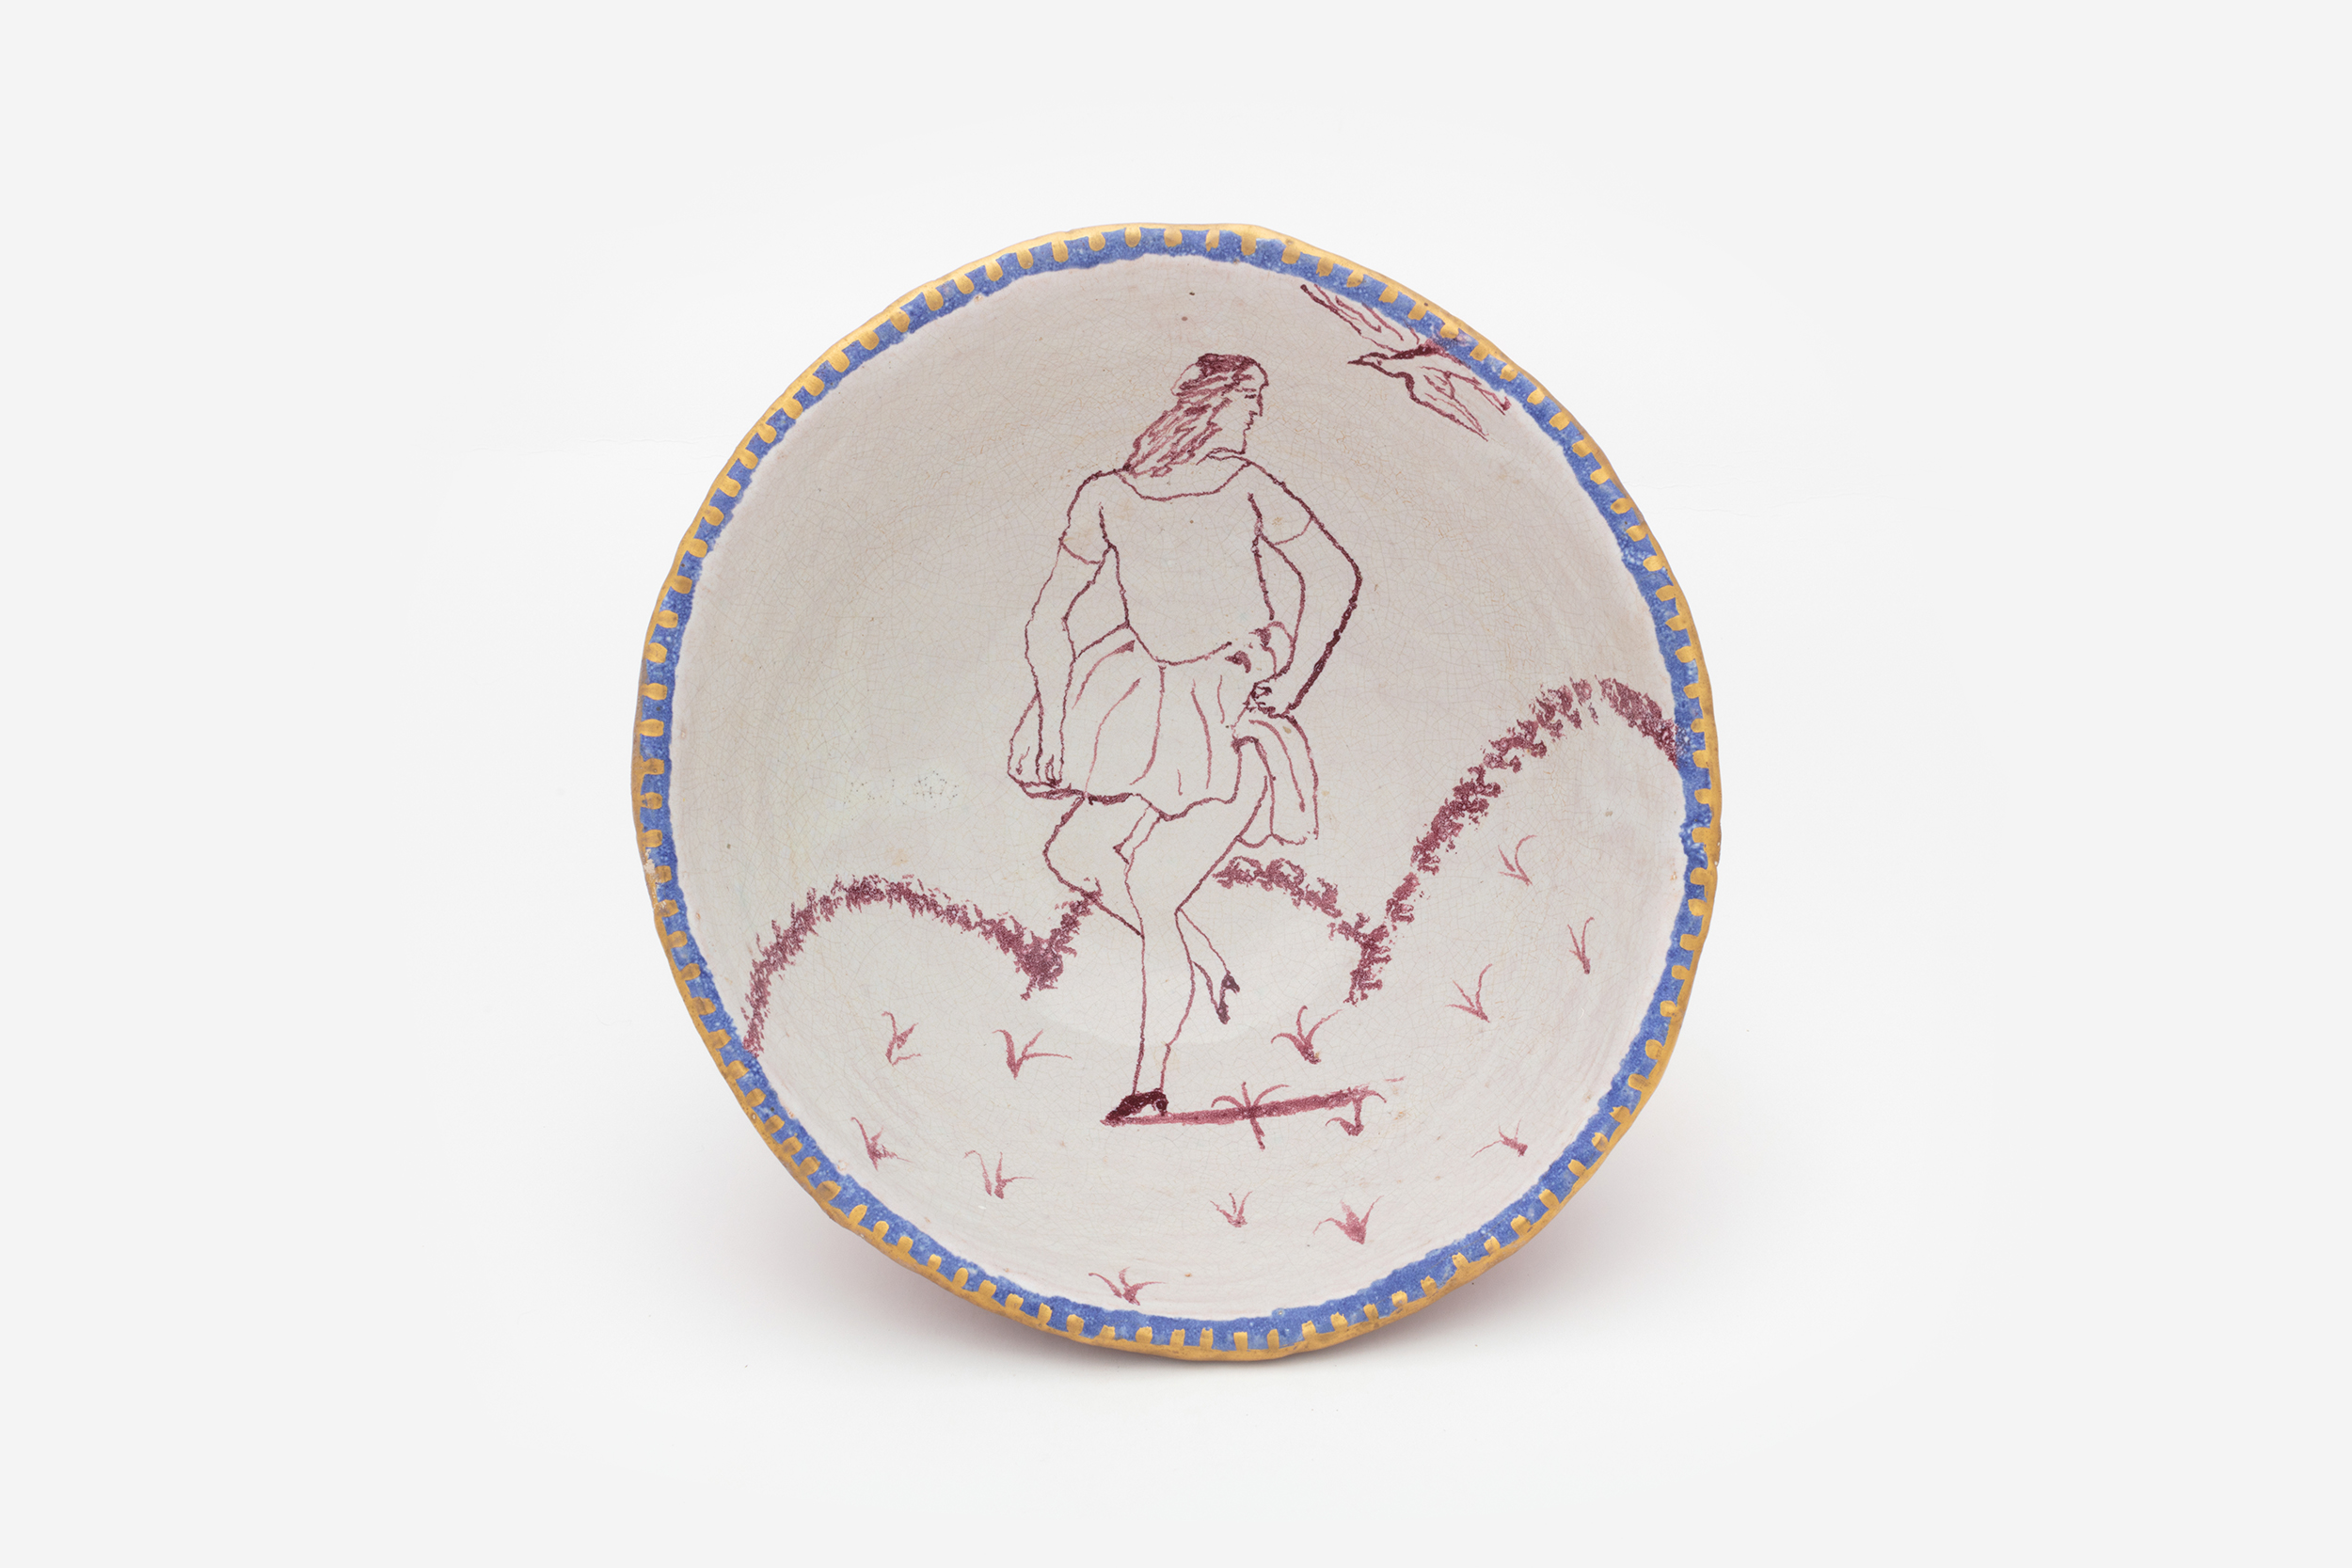 Hylton Nel - Lady in a landscape bowl, 